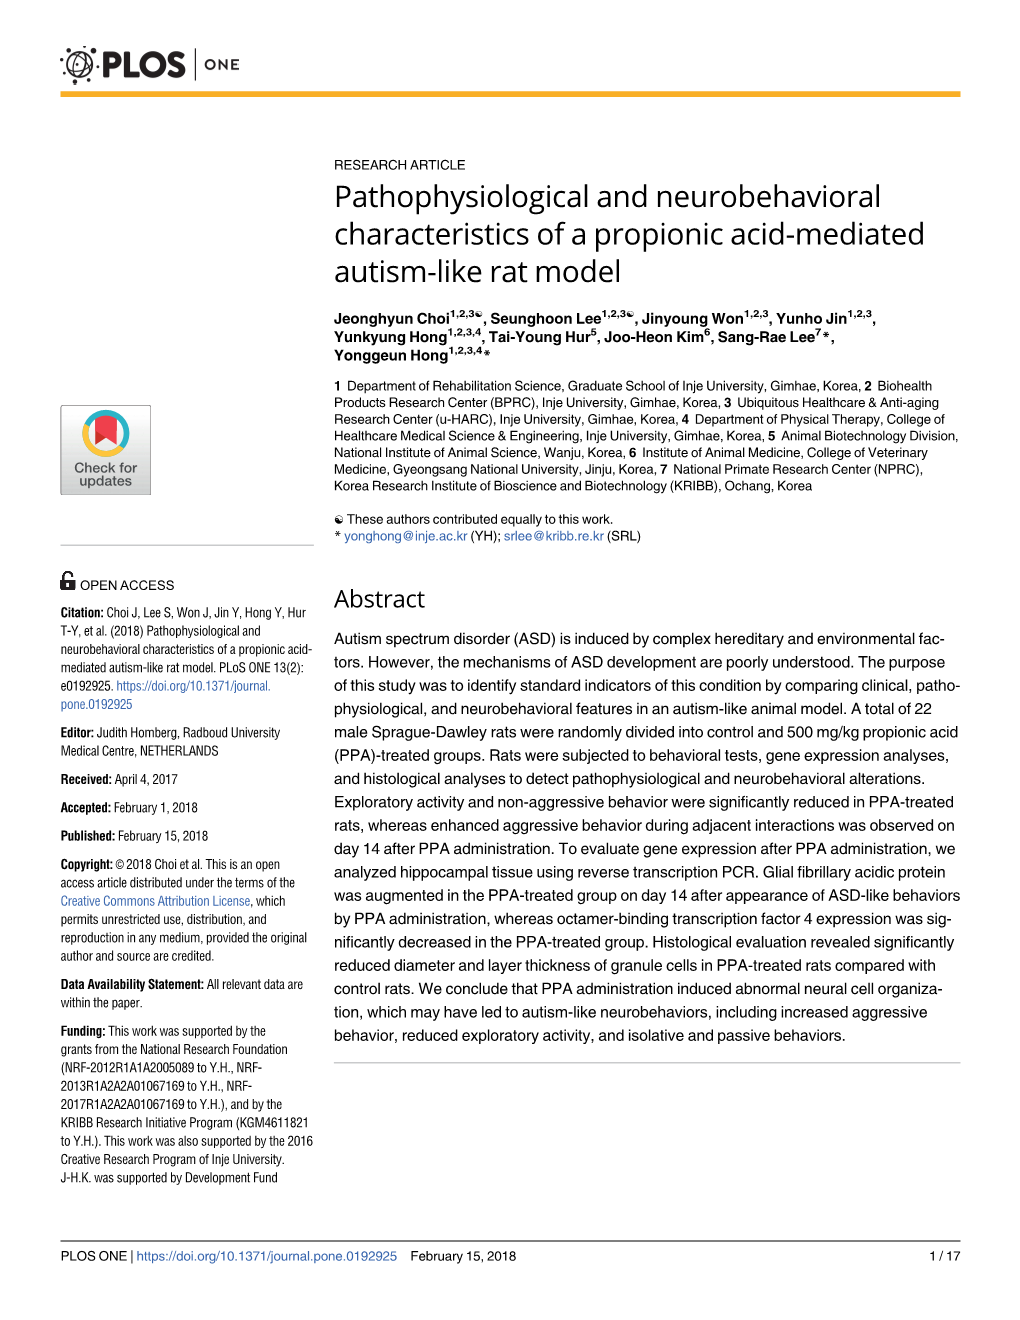 Pathophysiological and Neurobehavioral Characteristics of a Propionic Acid-Mediated Autism-Like Rat Model